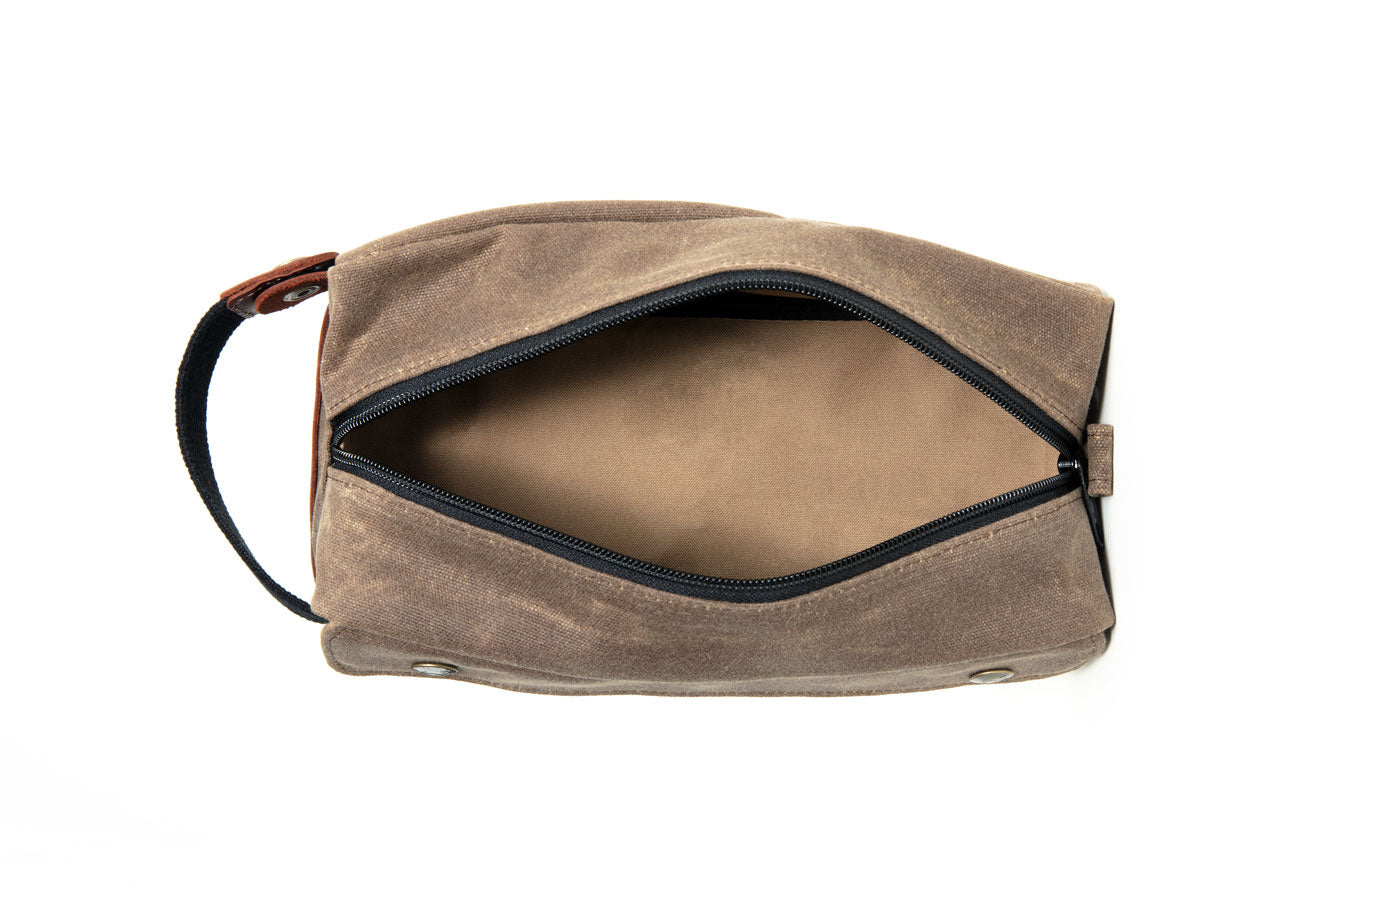 NutSac Bags | American-Made Bags for Men